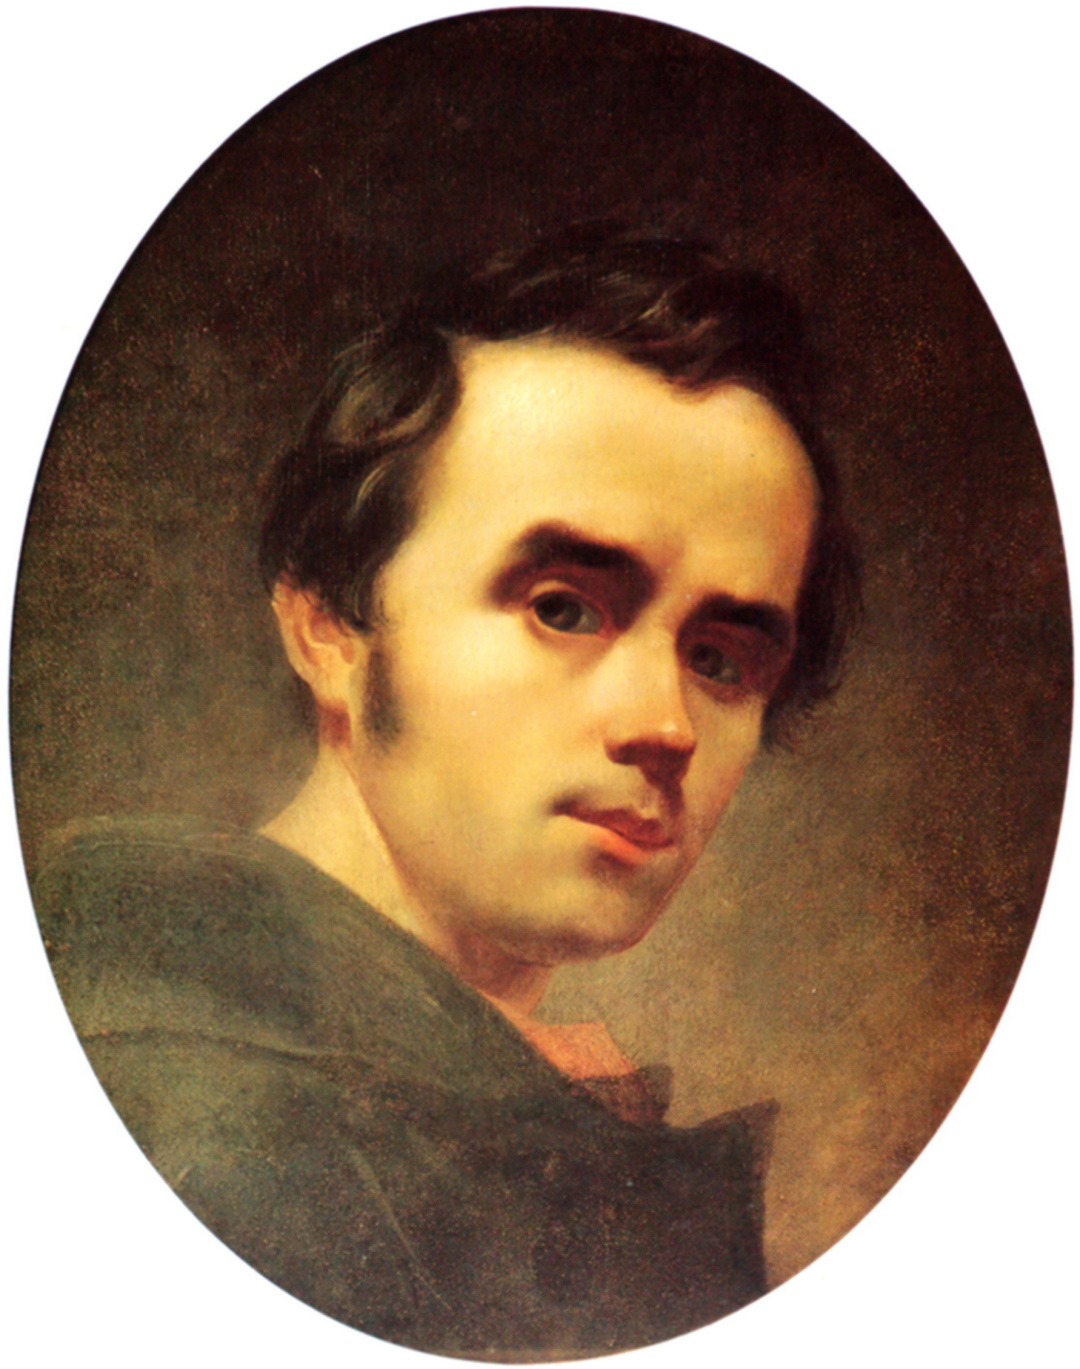 Тарас Шевченко, “Автопортрет”, 1840 р.